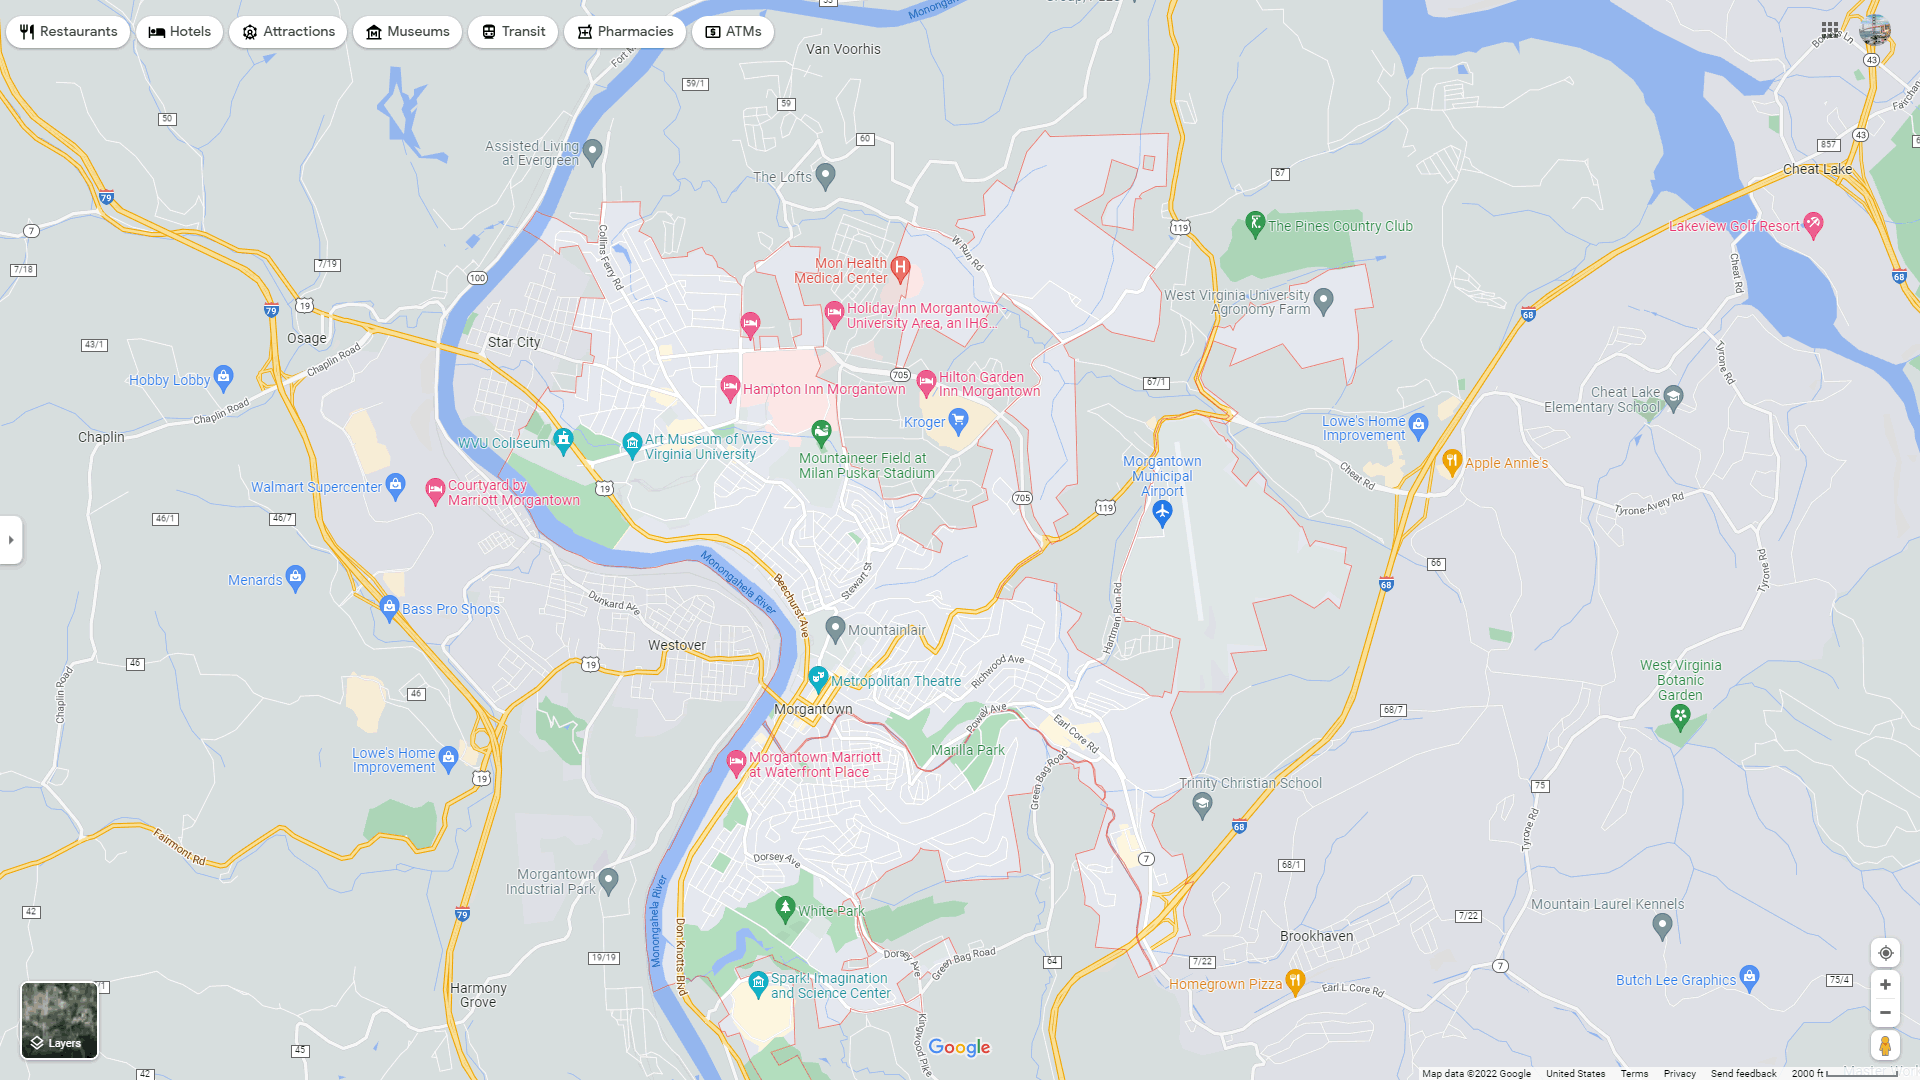 Morgantown map